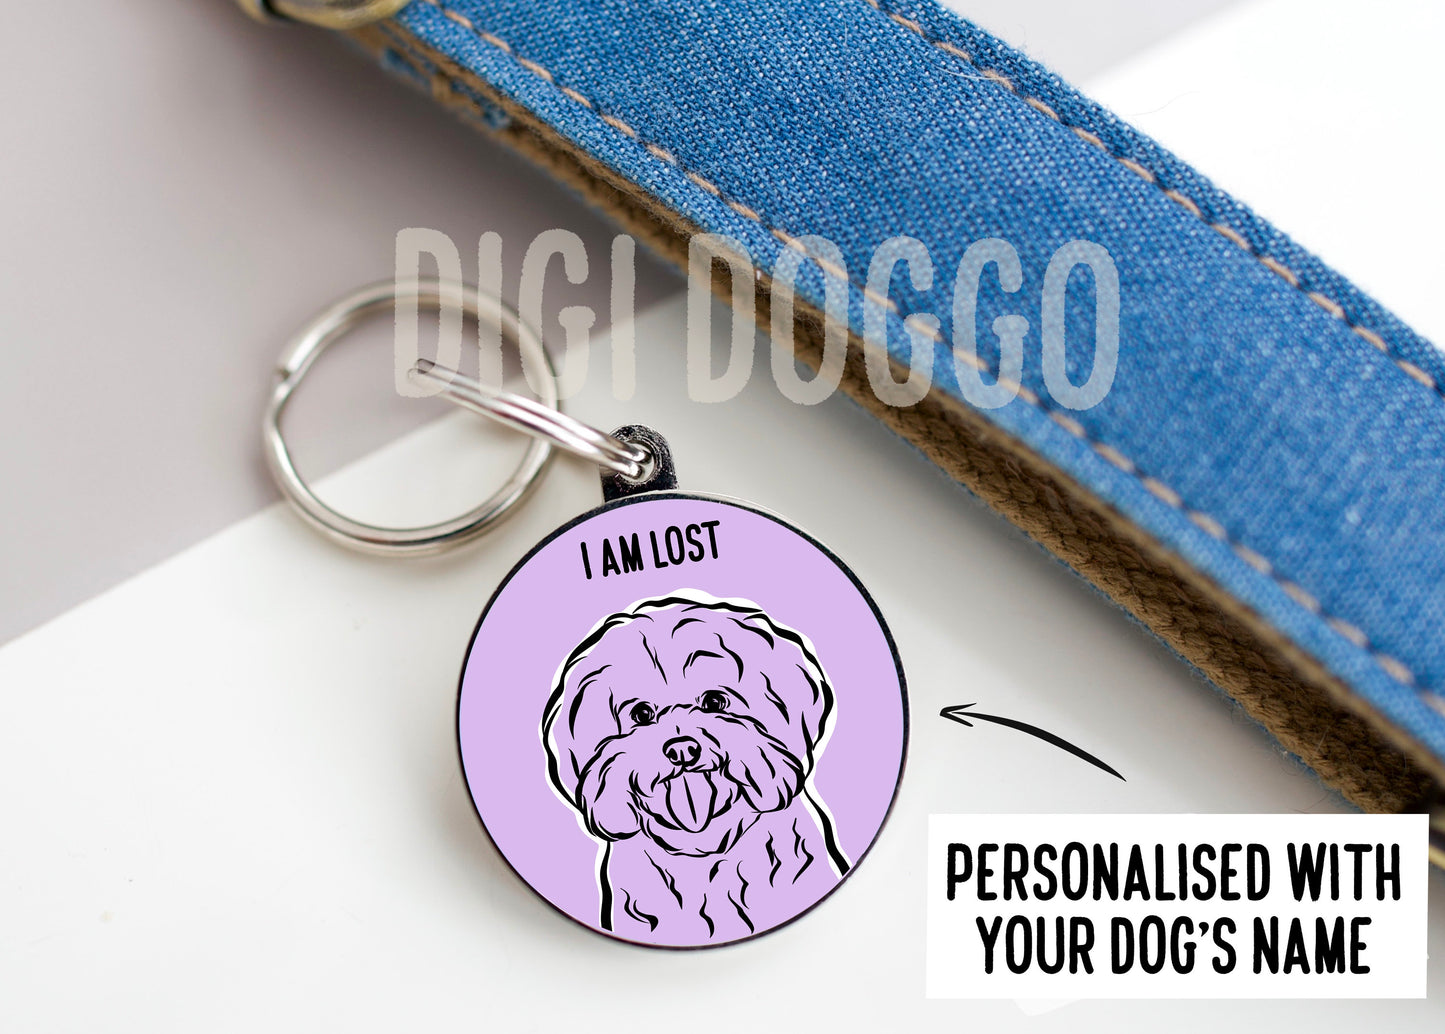 Bichon Frise Outline ID Tag/ Customised Dog Breed Portrait Outline Tag/ Personalised Trendy Dog Tag/ Bichon Frise Bespoke Gift/Keepsake Gift